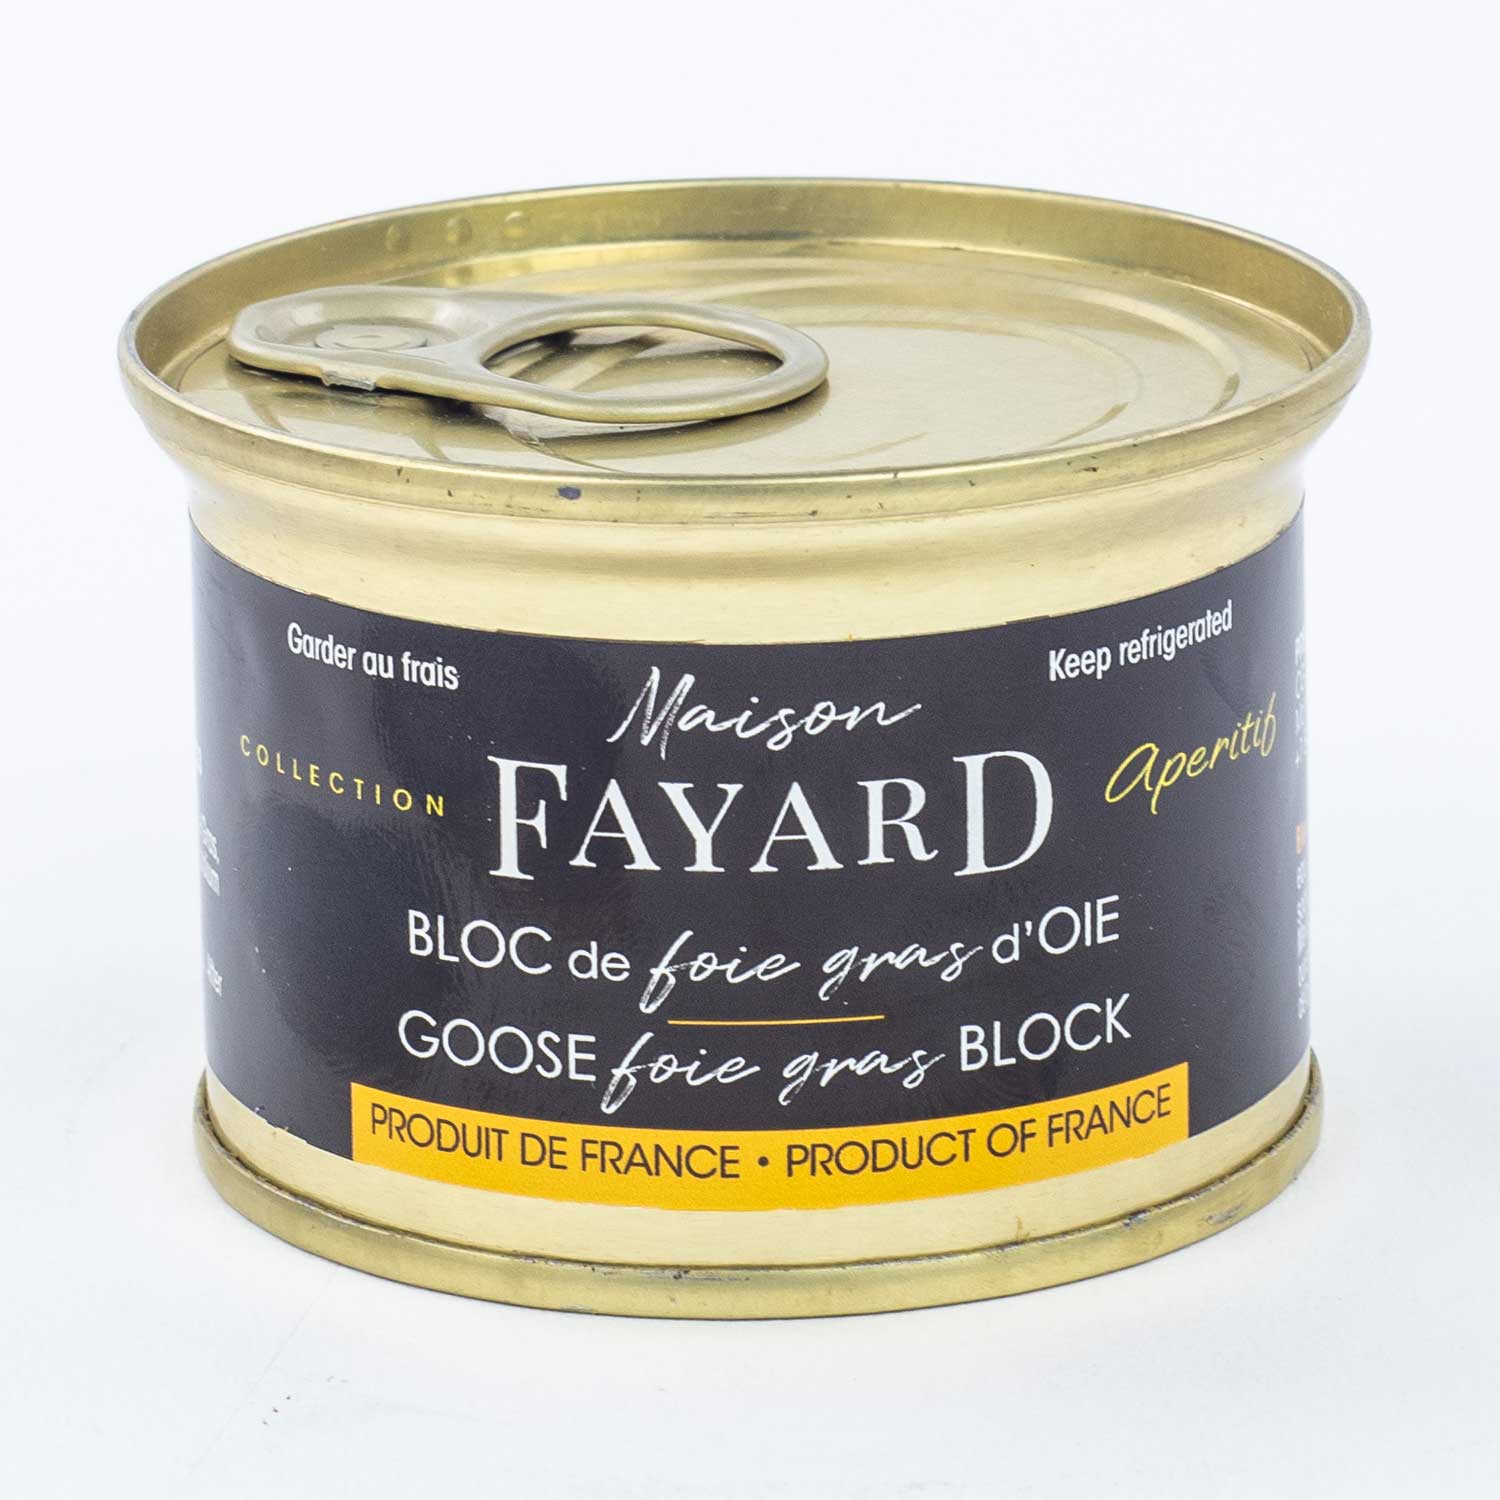 Foie gras frais - Le Canard Goulu